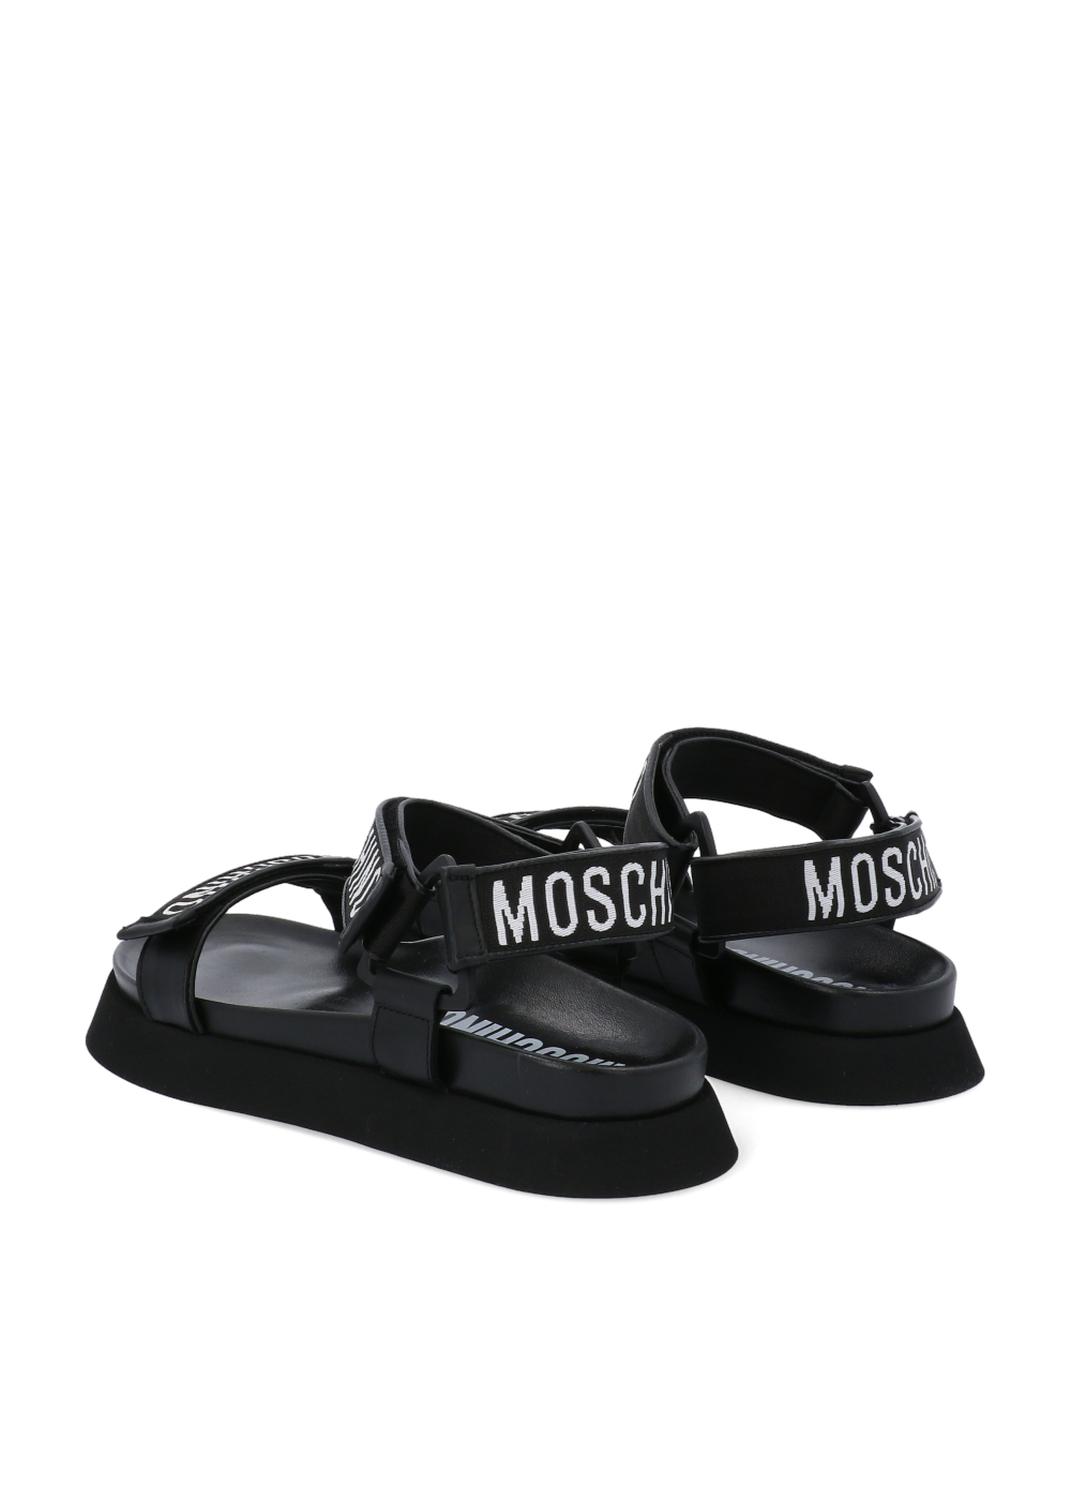 Moschino sandalias con correas bordadas MSC-MB16024